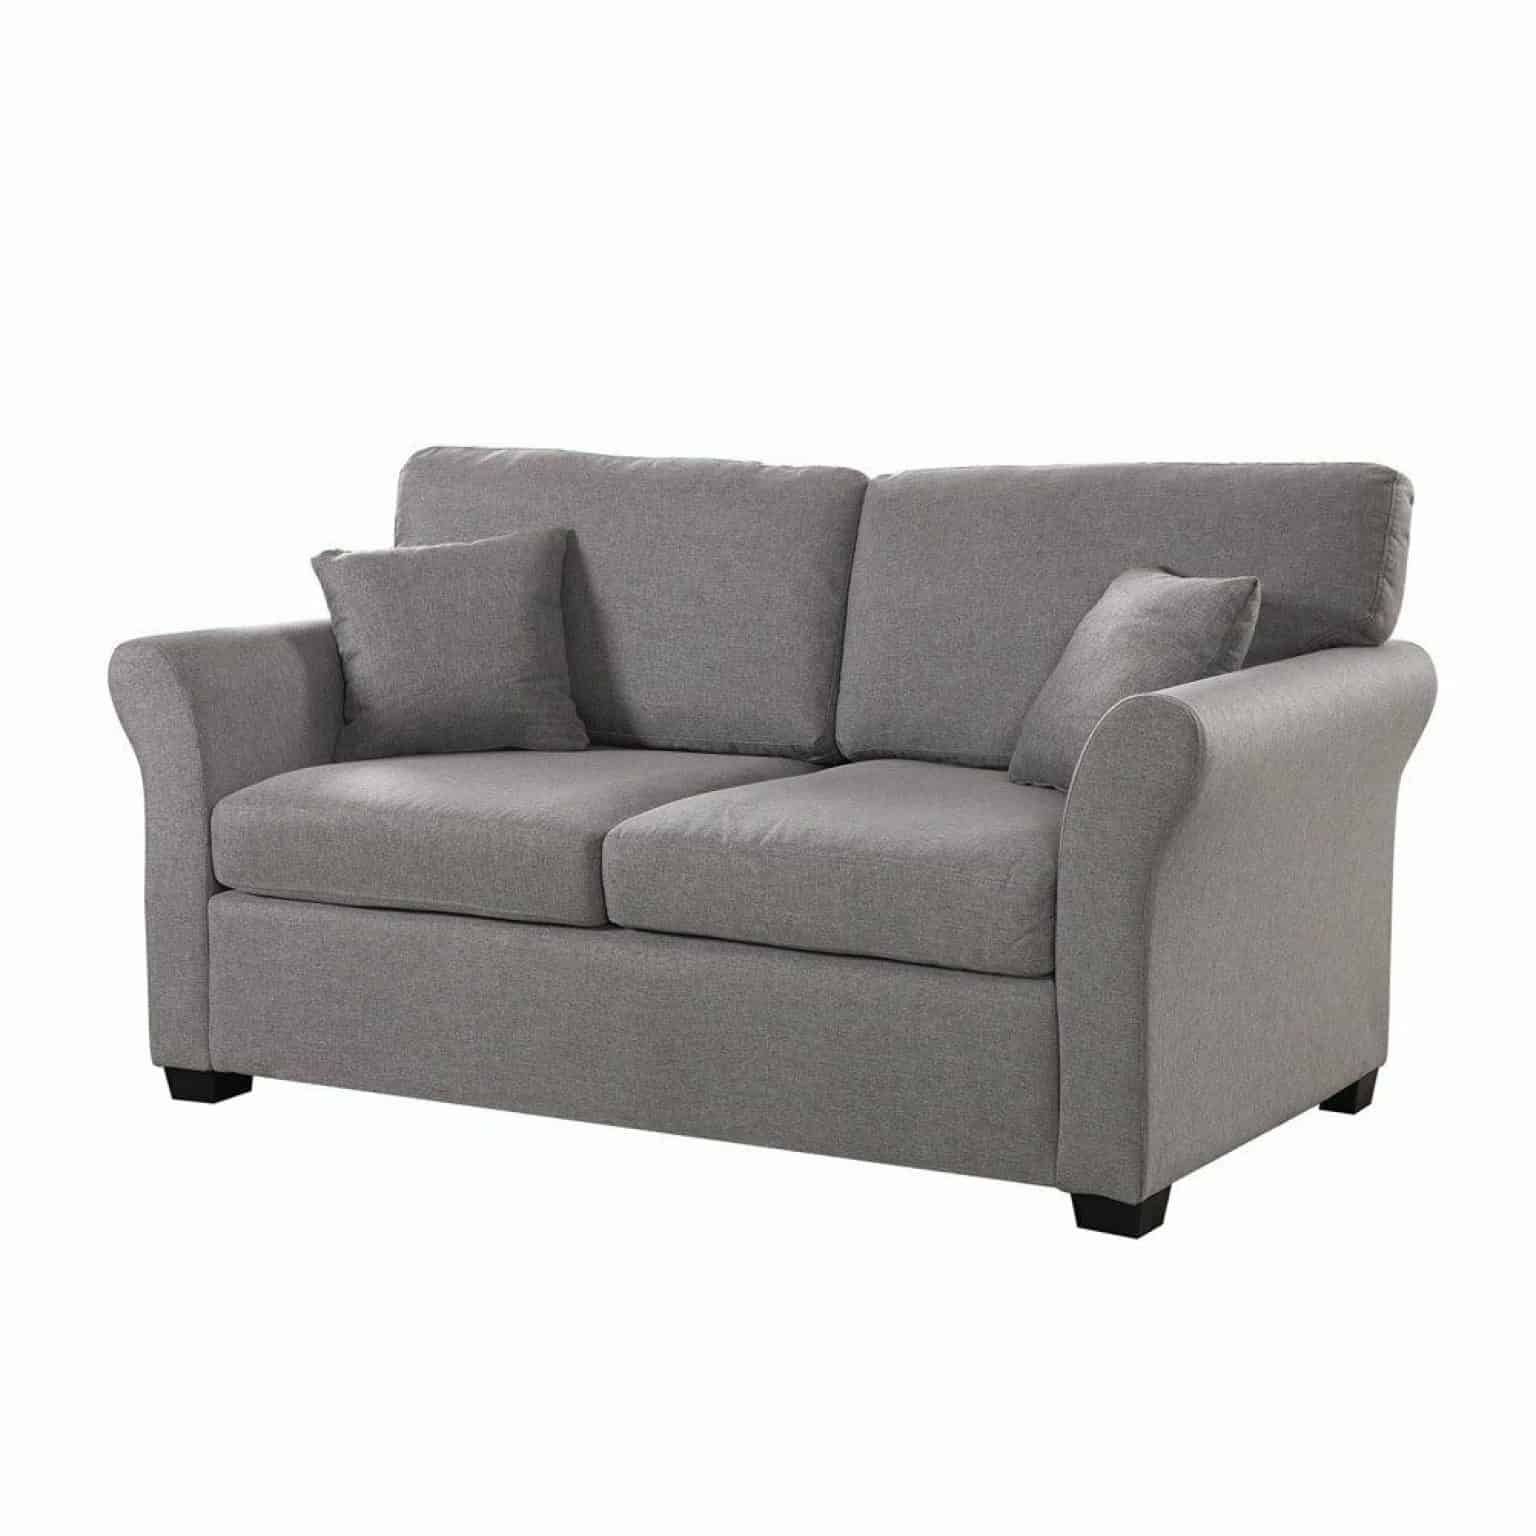 63" Bluish Grey Cozy Loveseat Sofa W/ 2 Accent Pillows – Affordable Regarding Sofas In Bluish Grey (View 4 of 20)